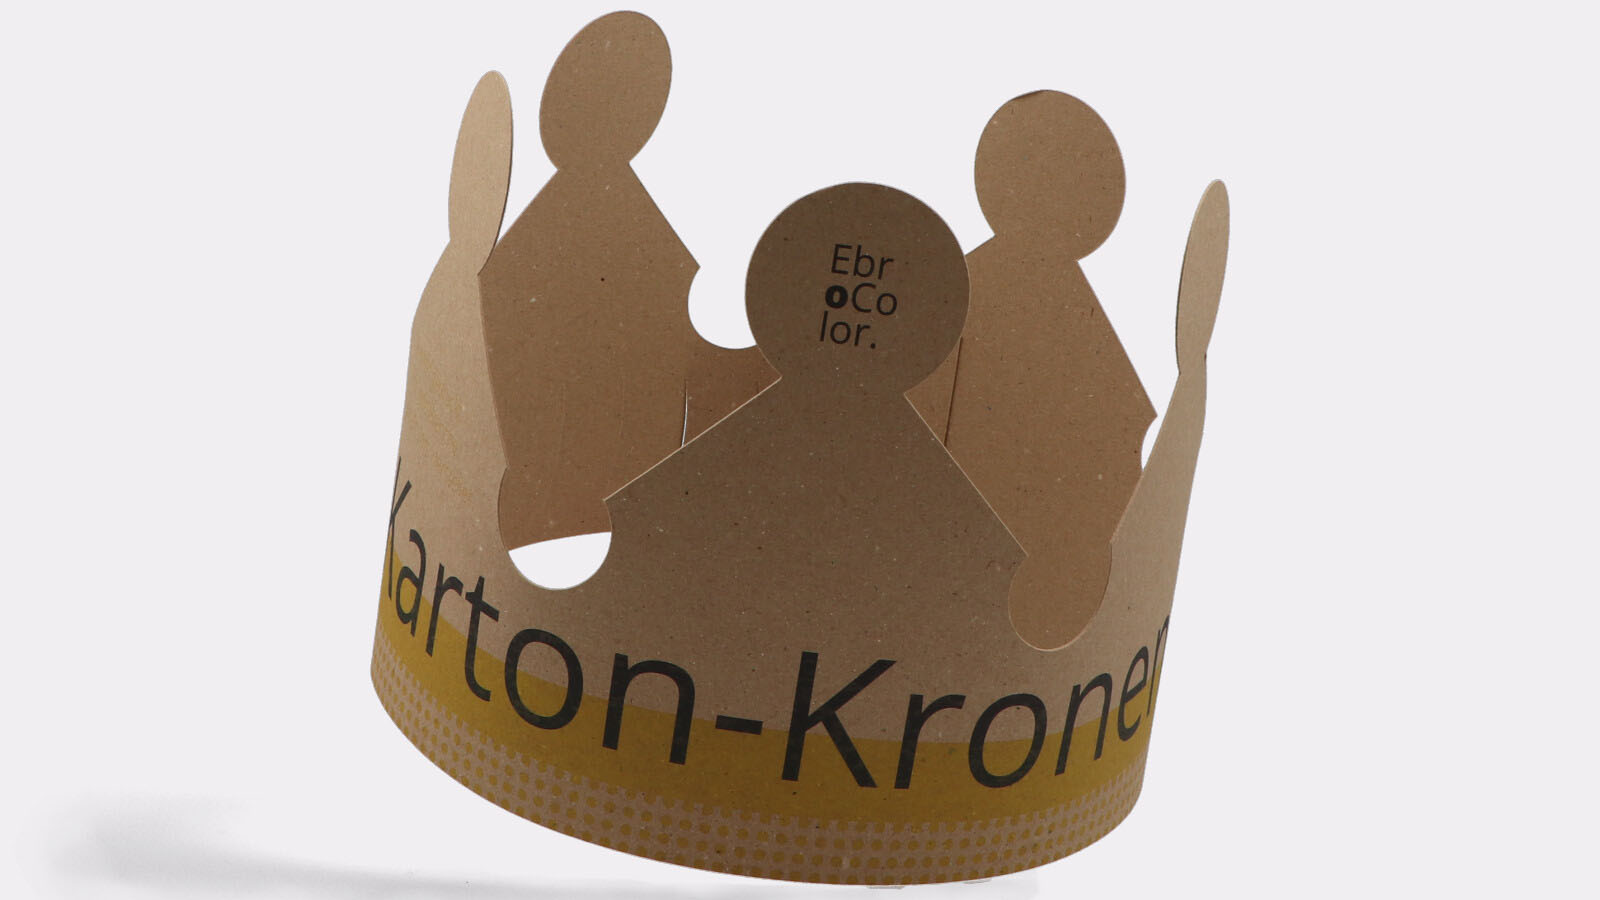 Cardboard crown made from brown recycled cardboard